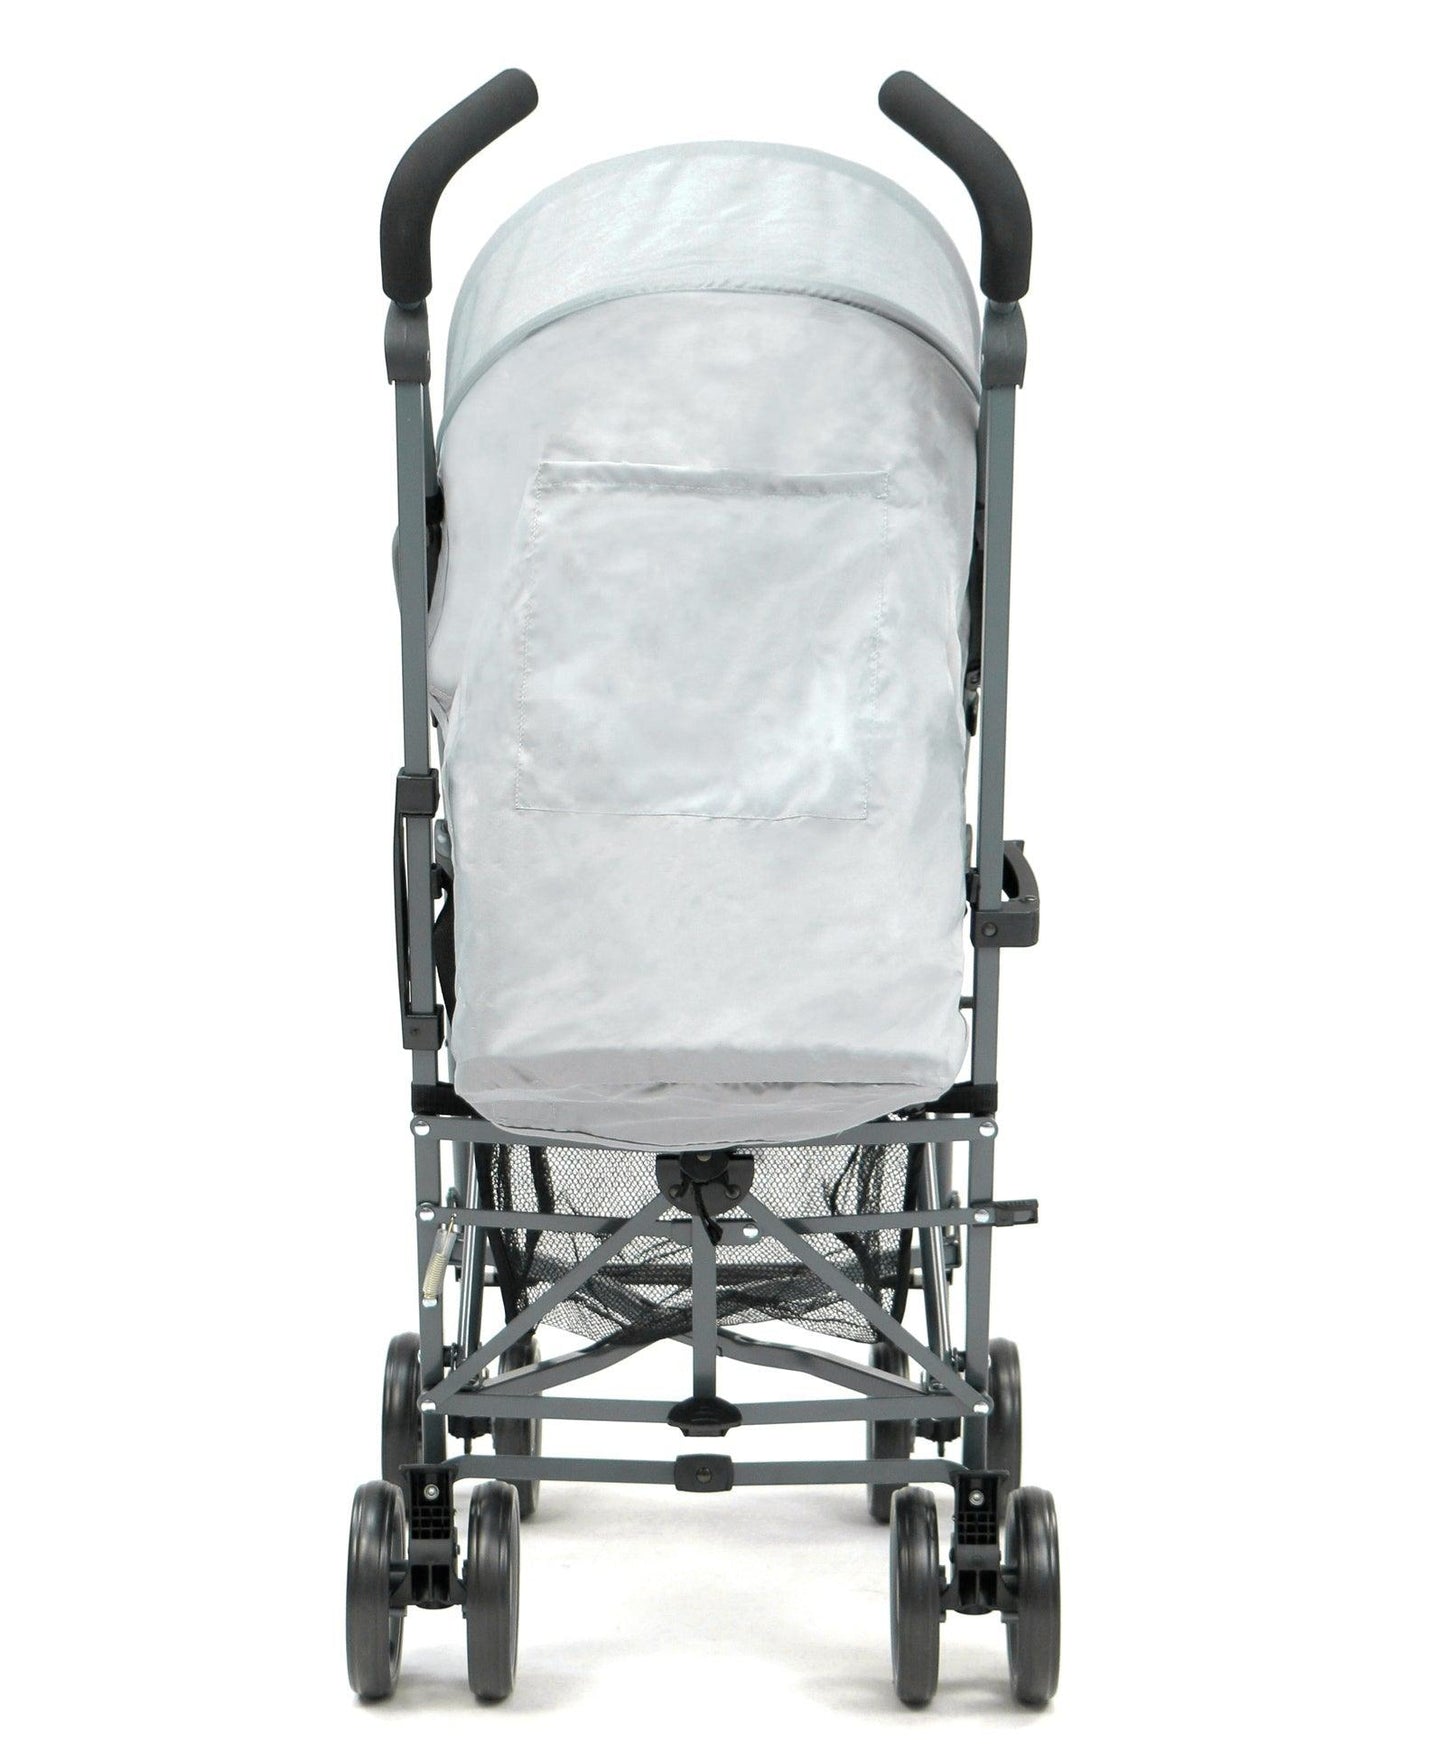 PATOYS | Asalvo Stroller 10896 Trotter Plus Anthracite - Multicolour Baby Stroller Asalvo